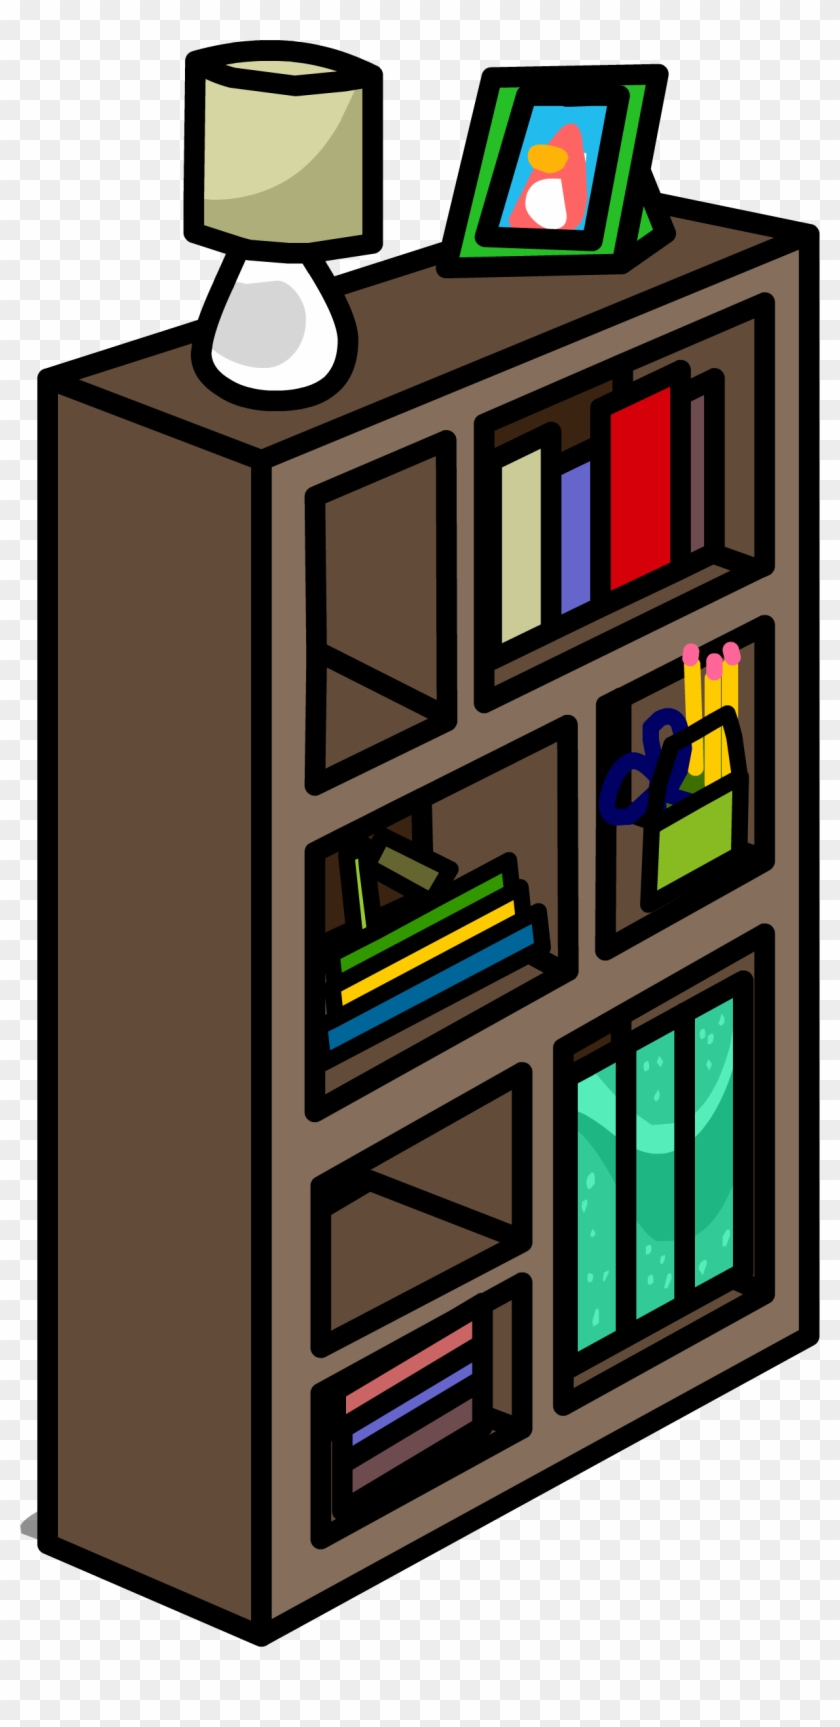 Pin Bookshelf Clip Art - Bookcase - Free Transparent PNG Clipart Images ...